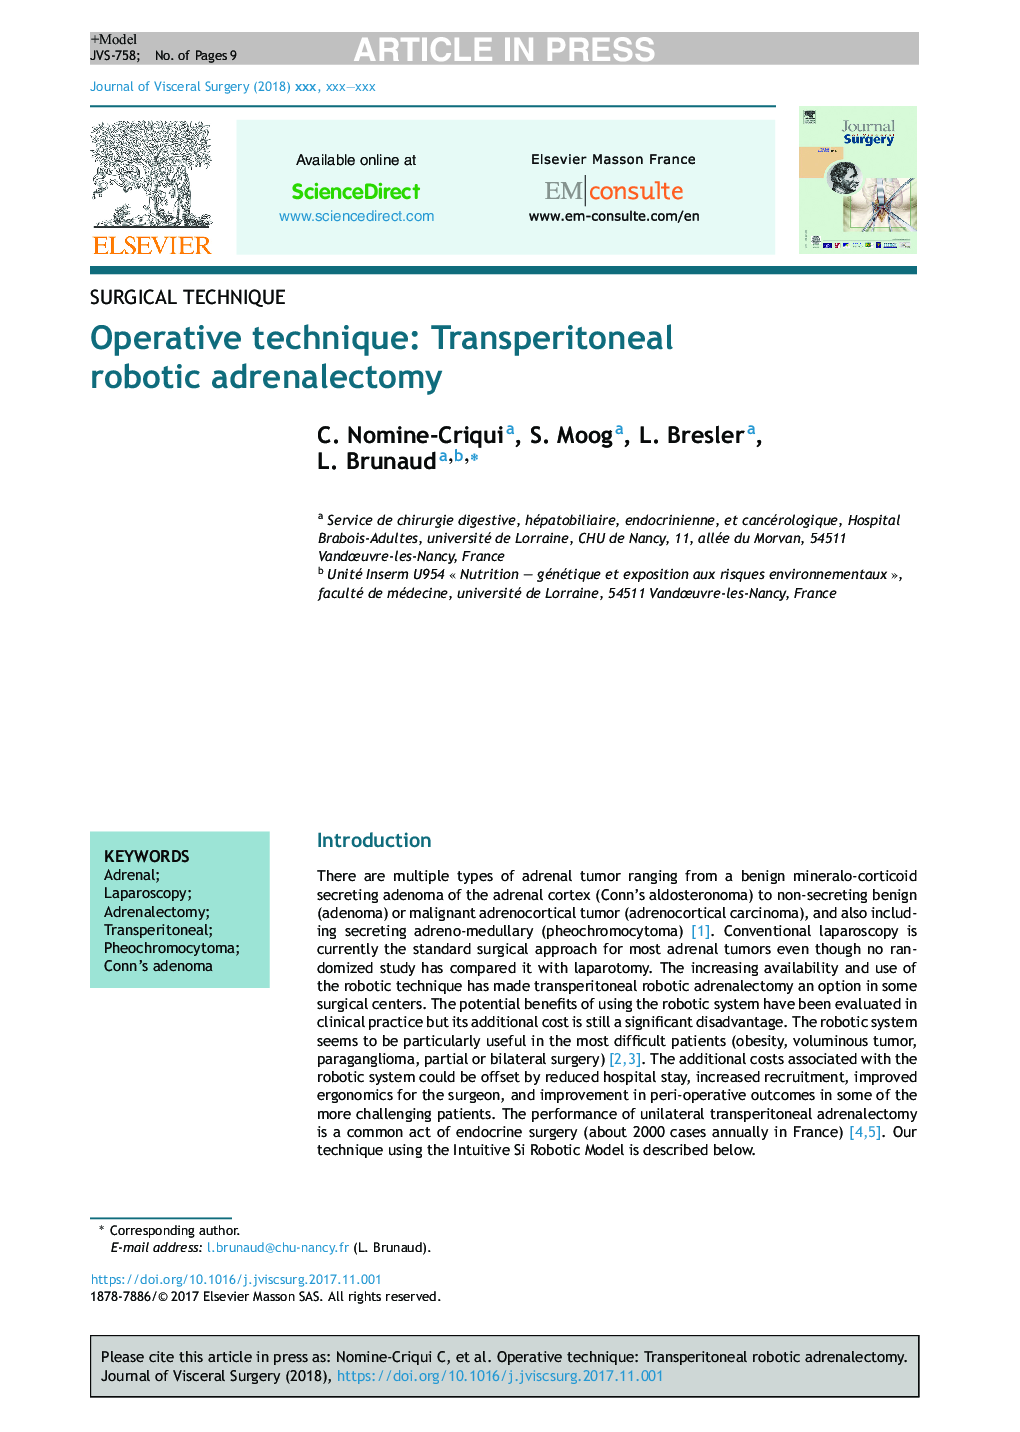 Operative technique: Transperitoneal robotic adrenalectomy